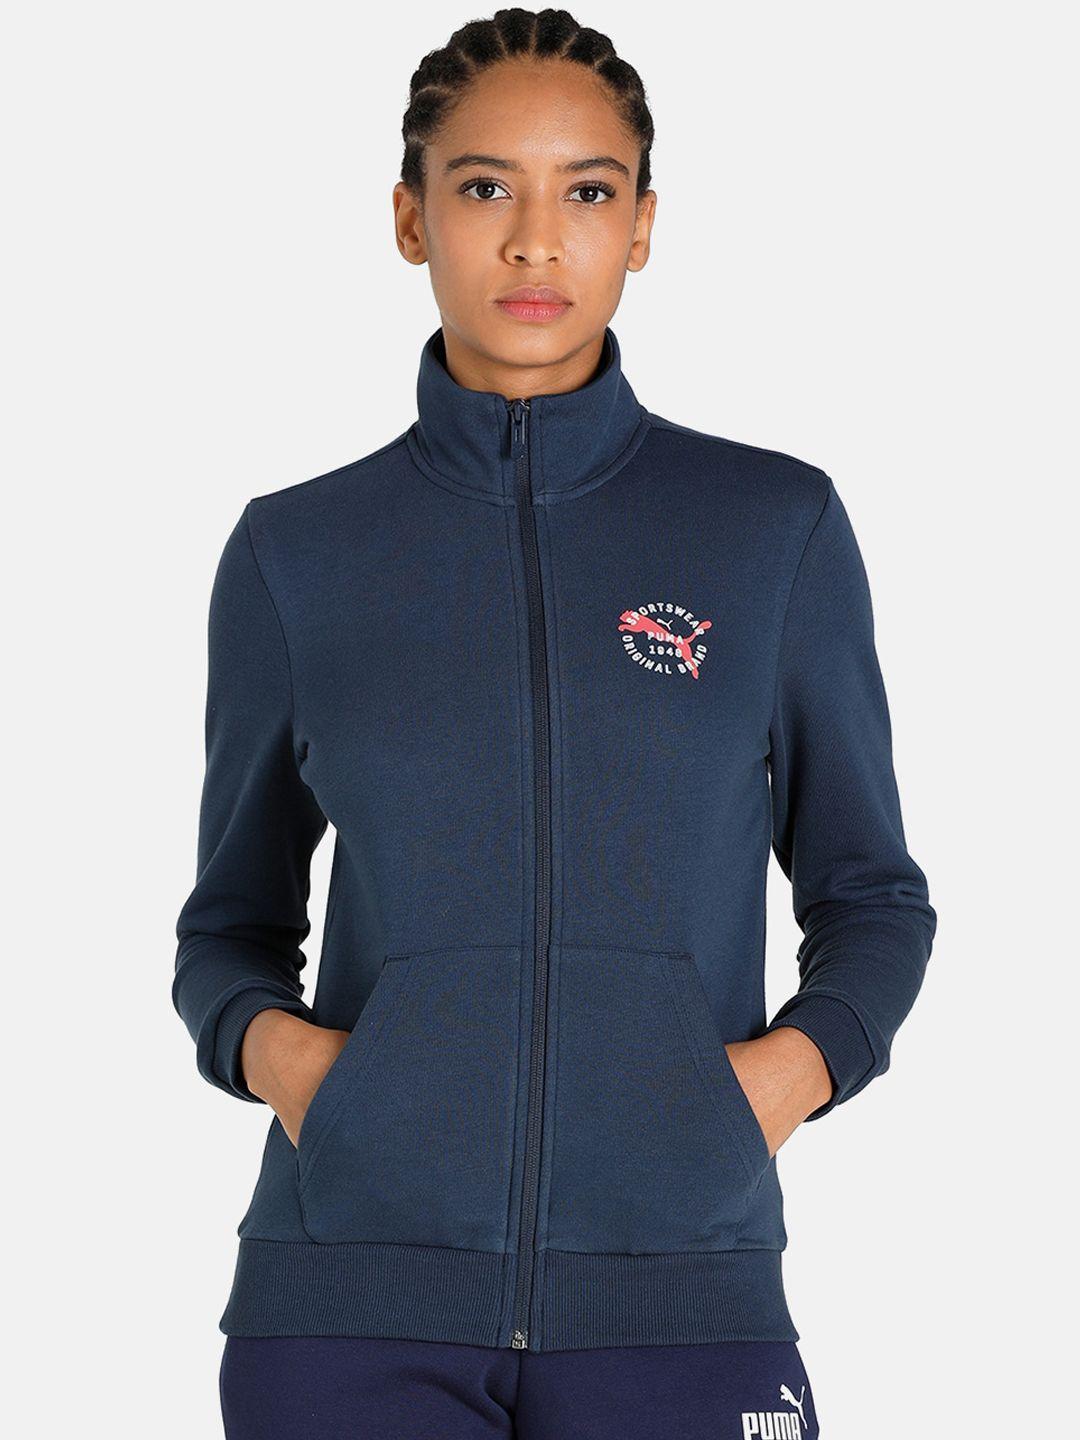 puma-graphic-logo-jacket-vii-cotton-sporty-jacket